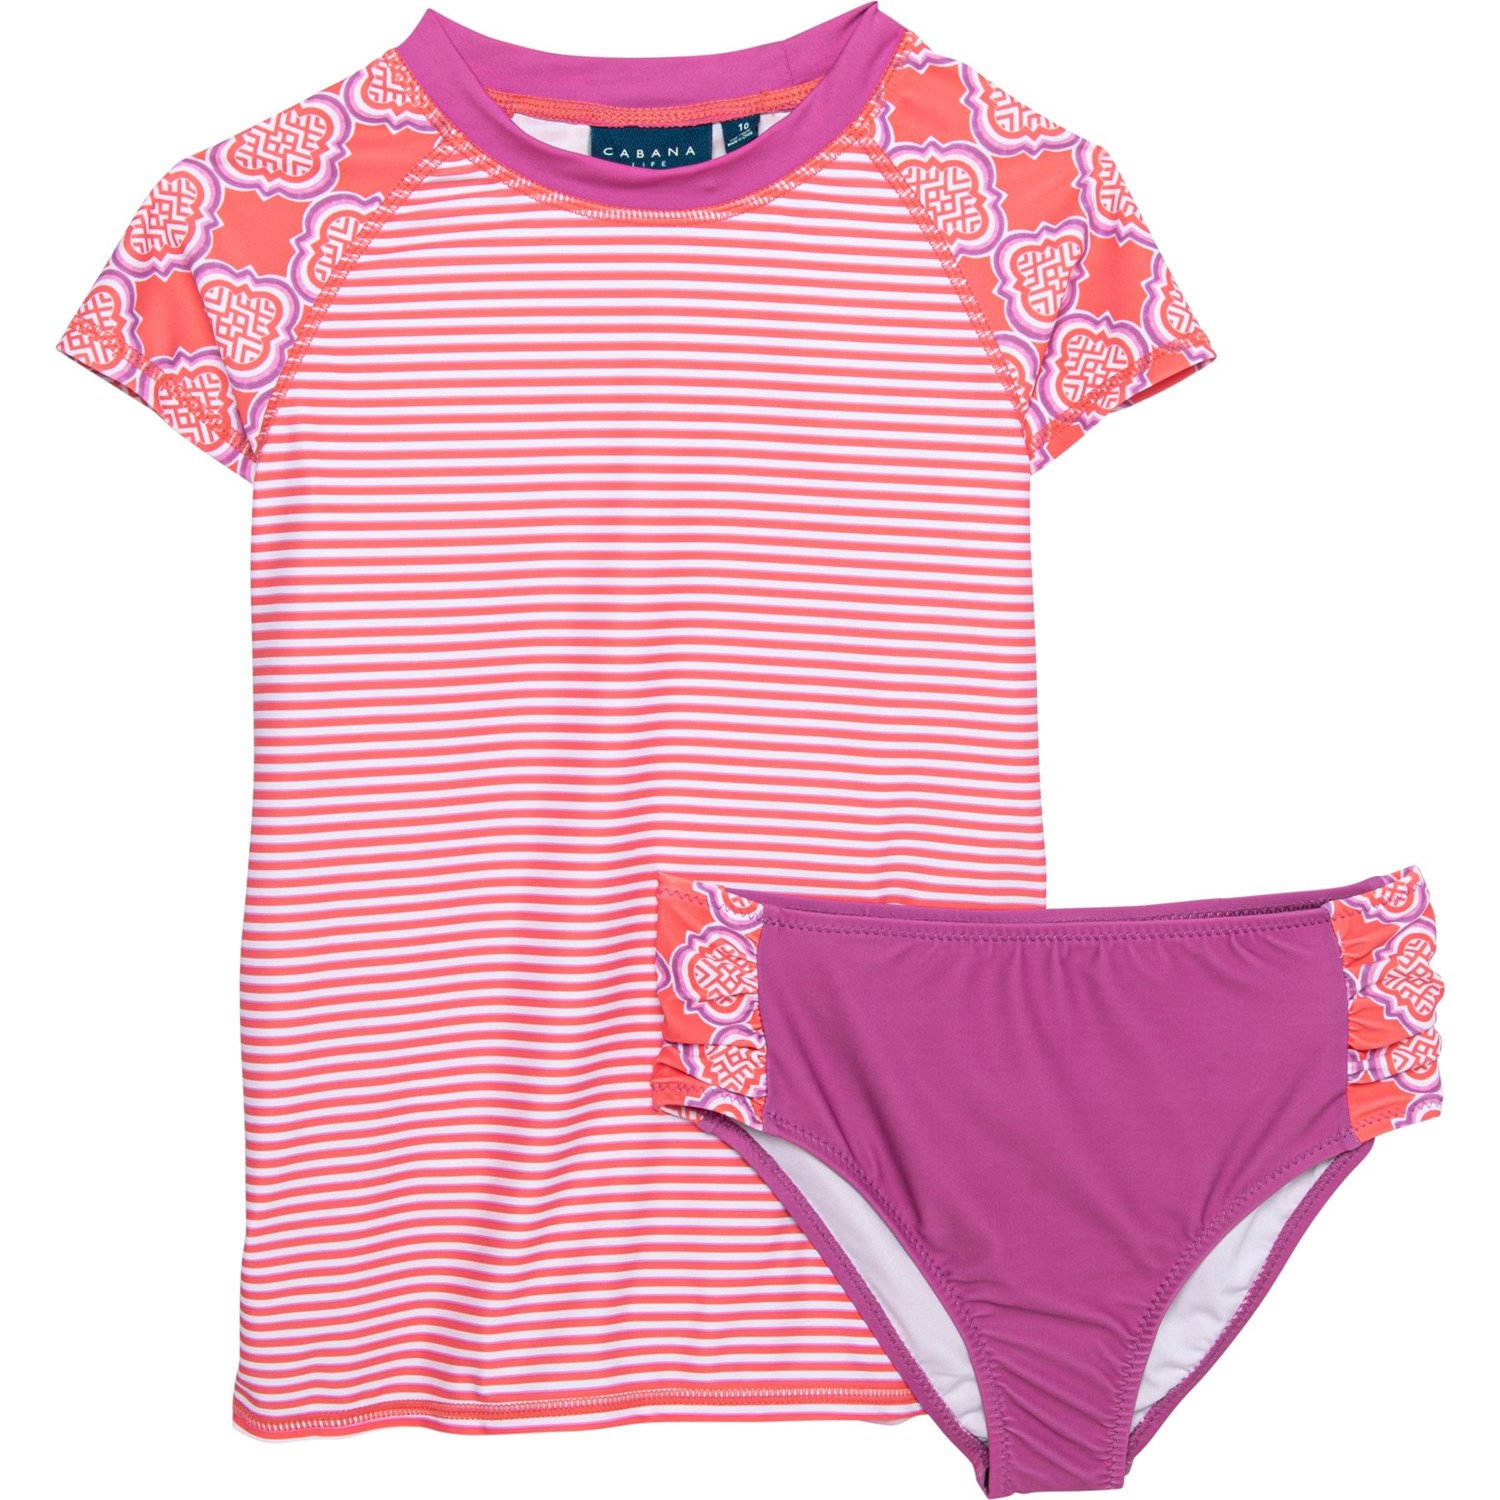 Cabana Life Toddler Girls Printed Rash Guard and Bikini Bottoms Set - UPF 50+, Short Sleeve